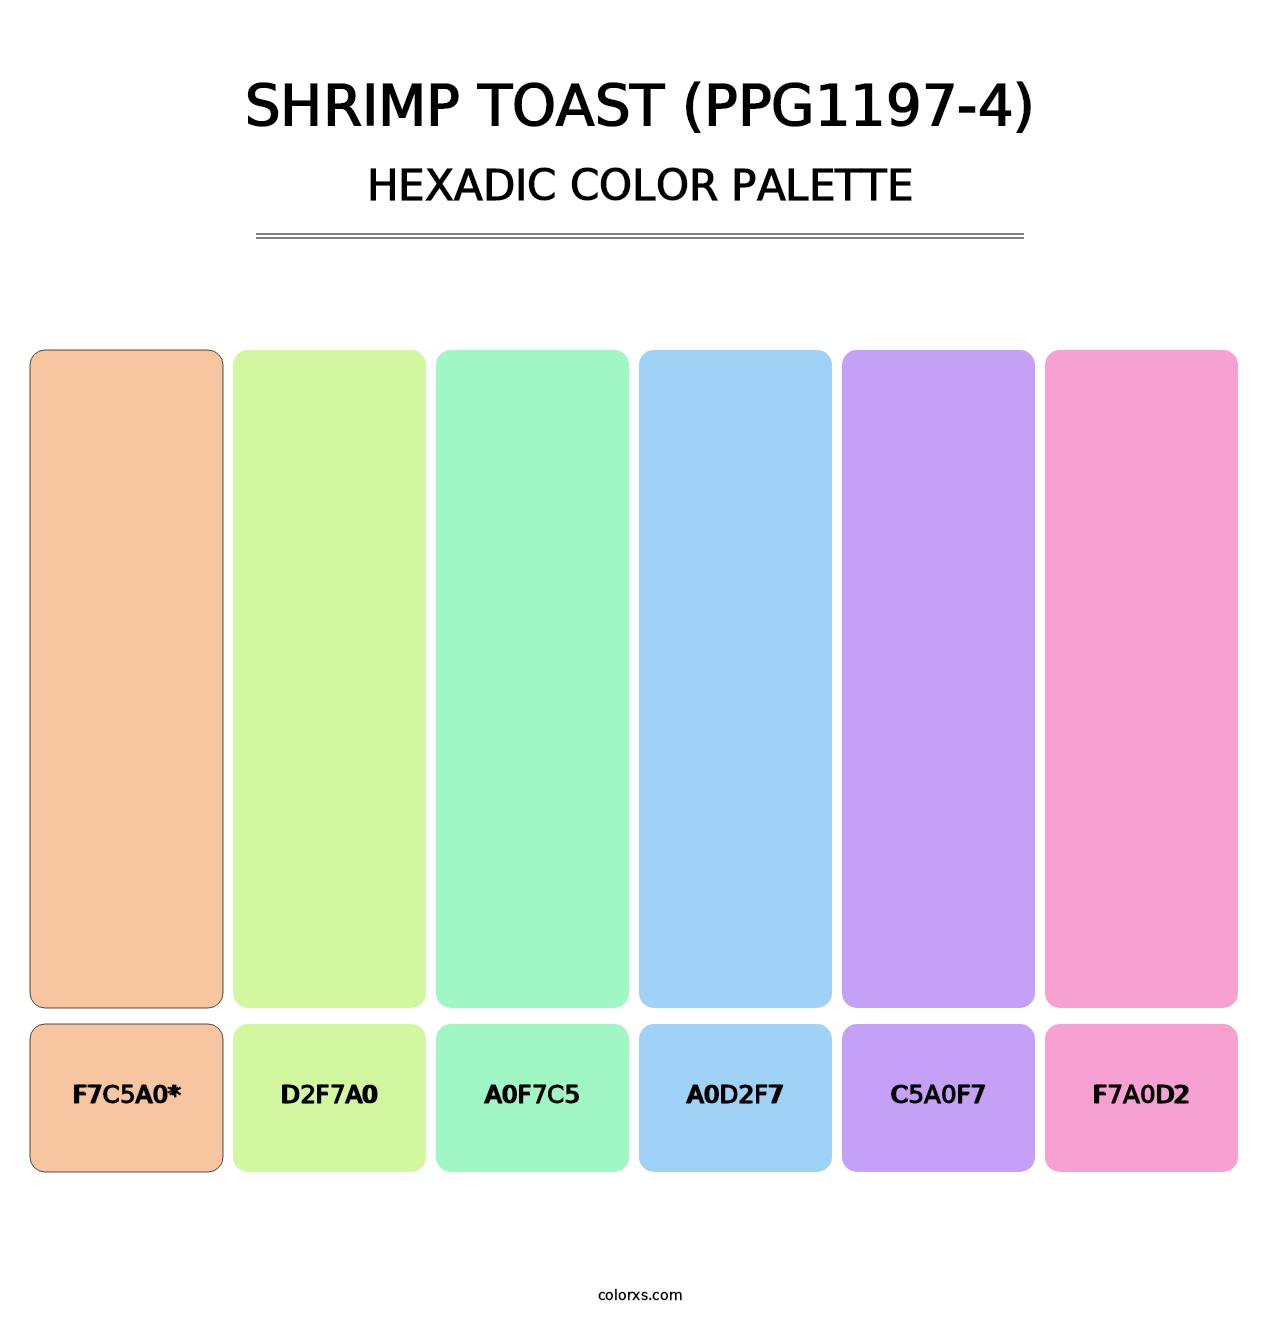 Shrimp Toast (PPG1197-4) - Hexadic Color Palette